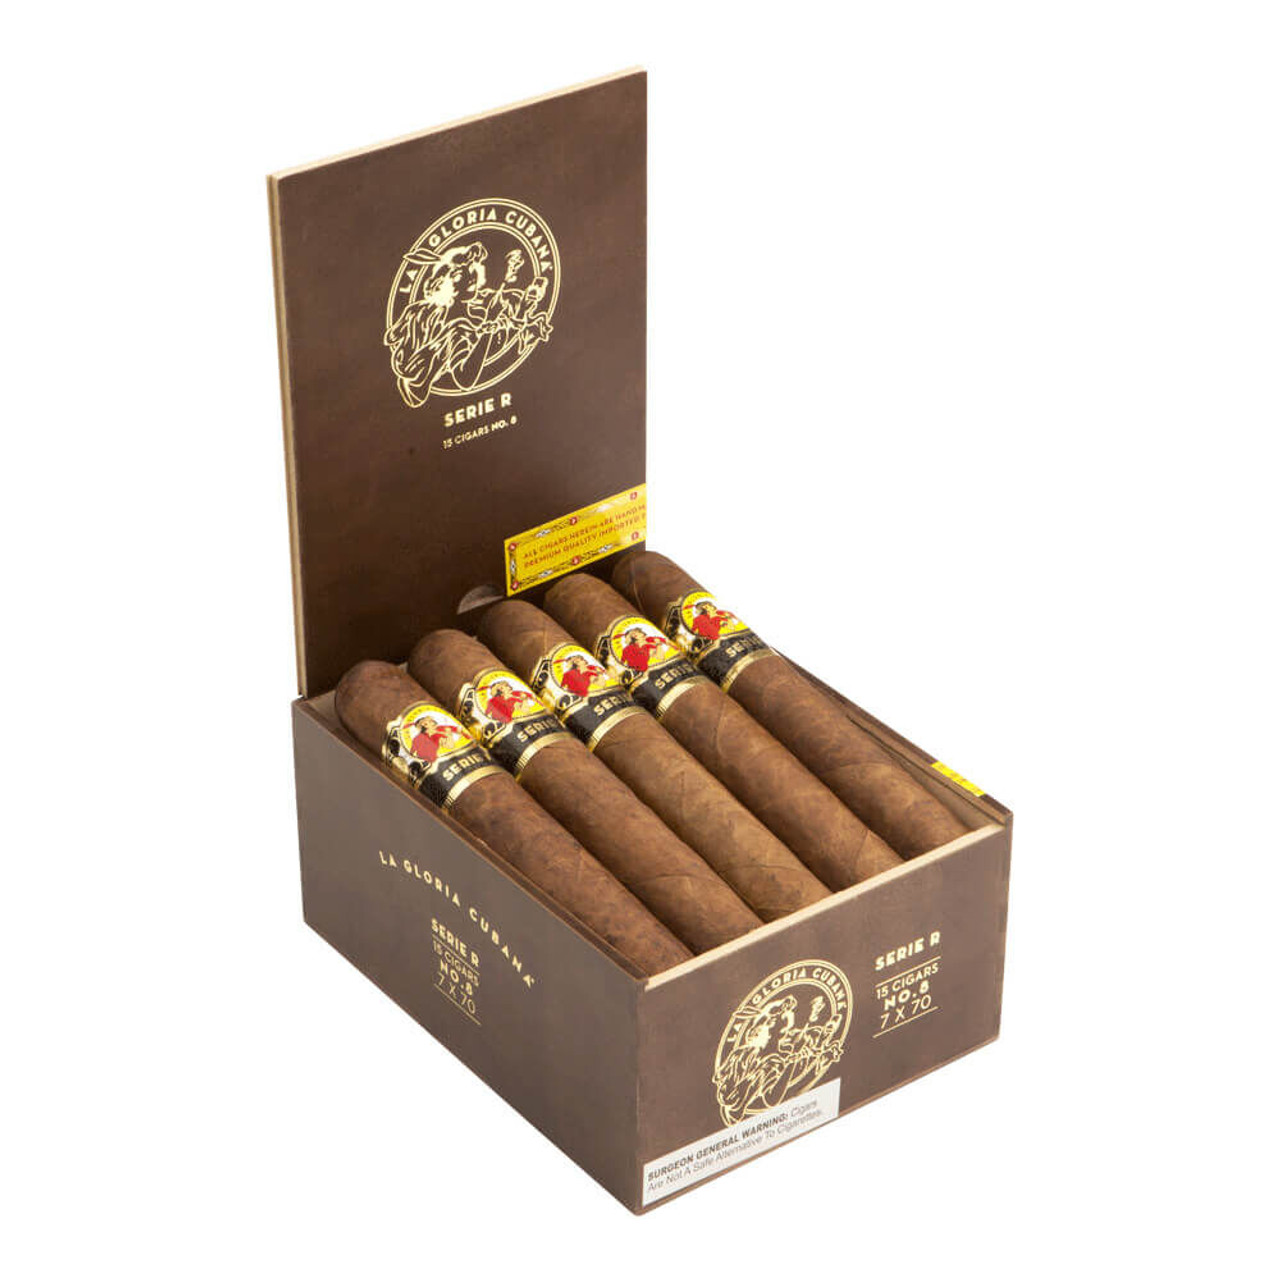 La Gloria Cubana Serie R No. 8 Cigars - 7 x 70 (Box of 15) Open